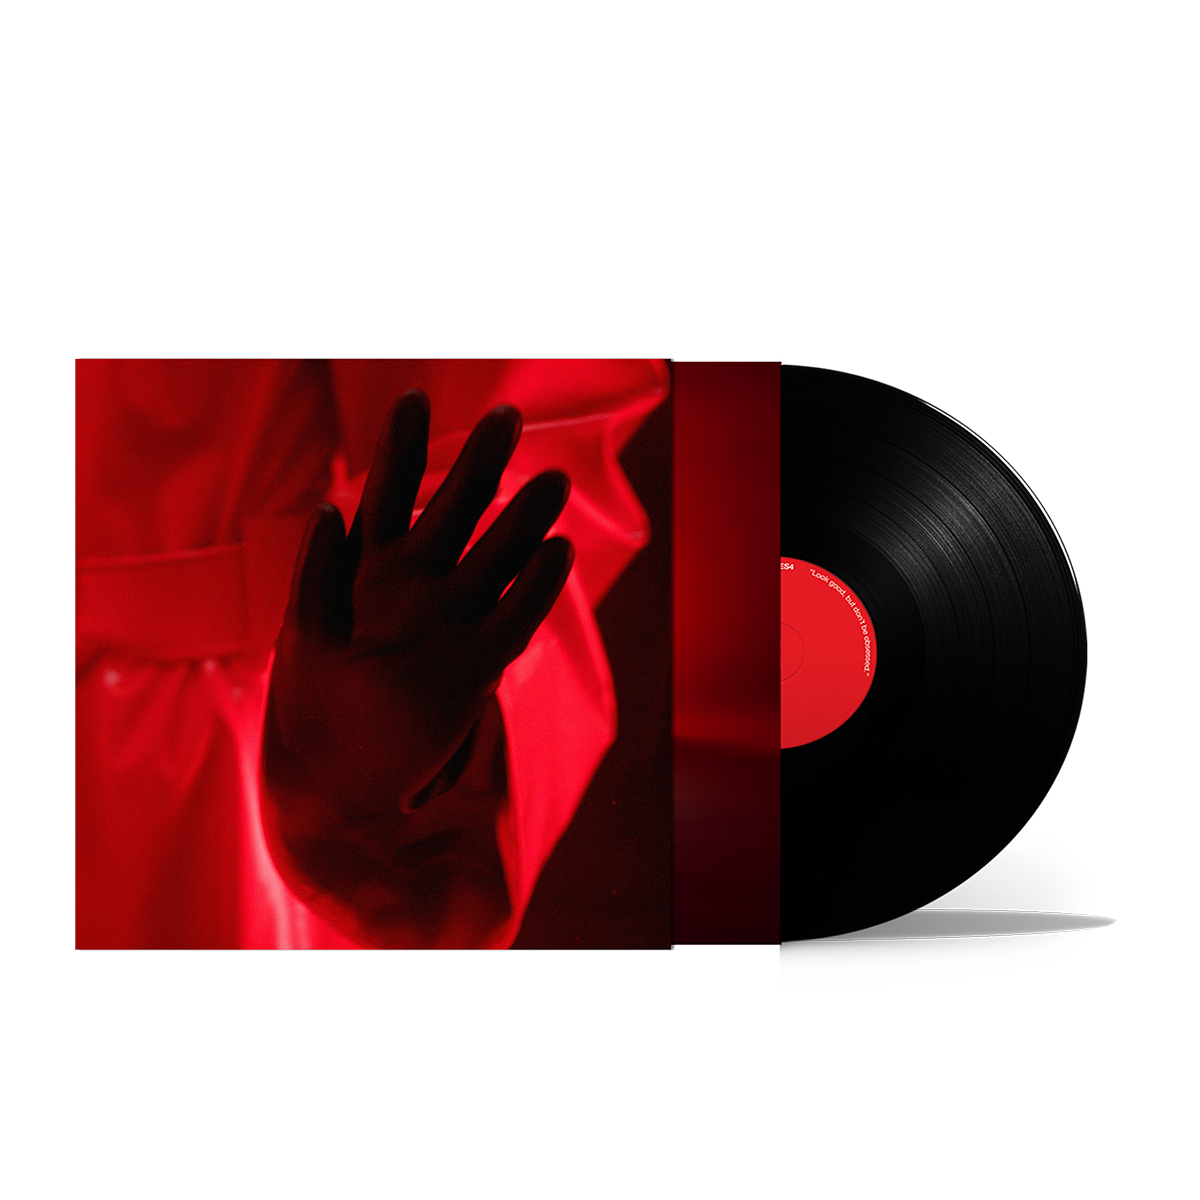 Chvrches - Screen Violence Alternate Artwork O-Card Vinyl: He Said She Said Edition